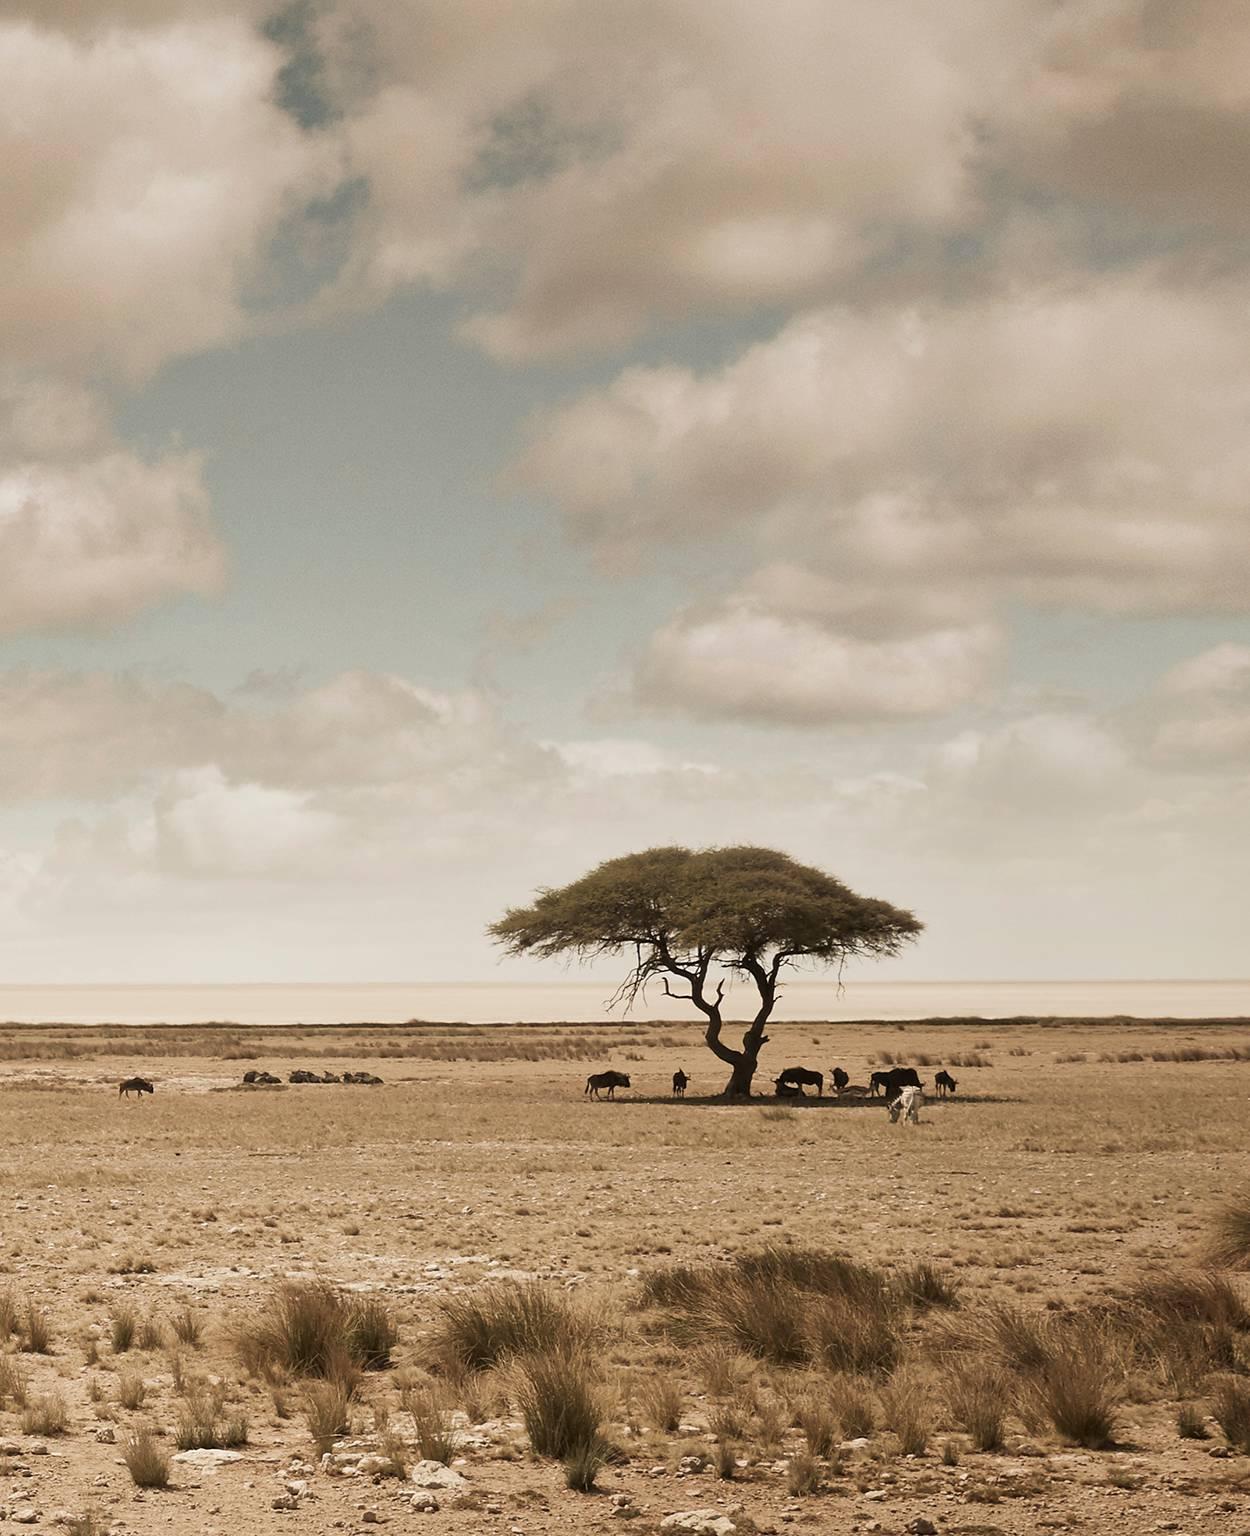 Etosha, Namibia - Photograph by Chris Gordaneer